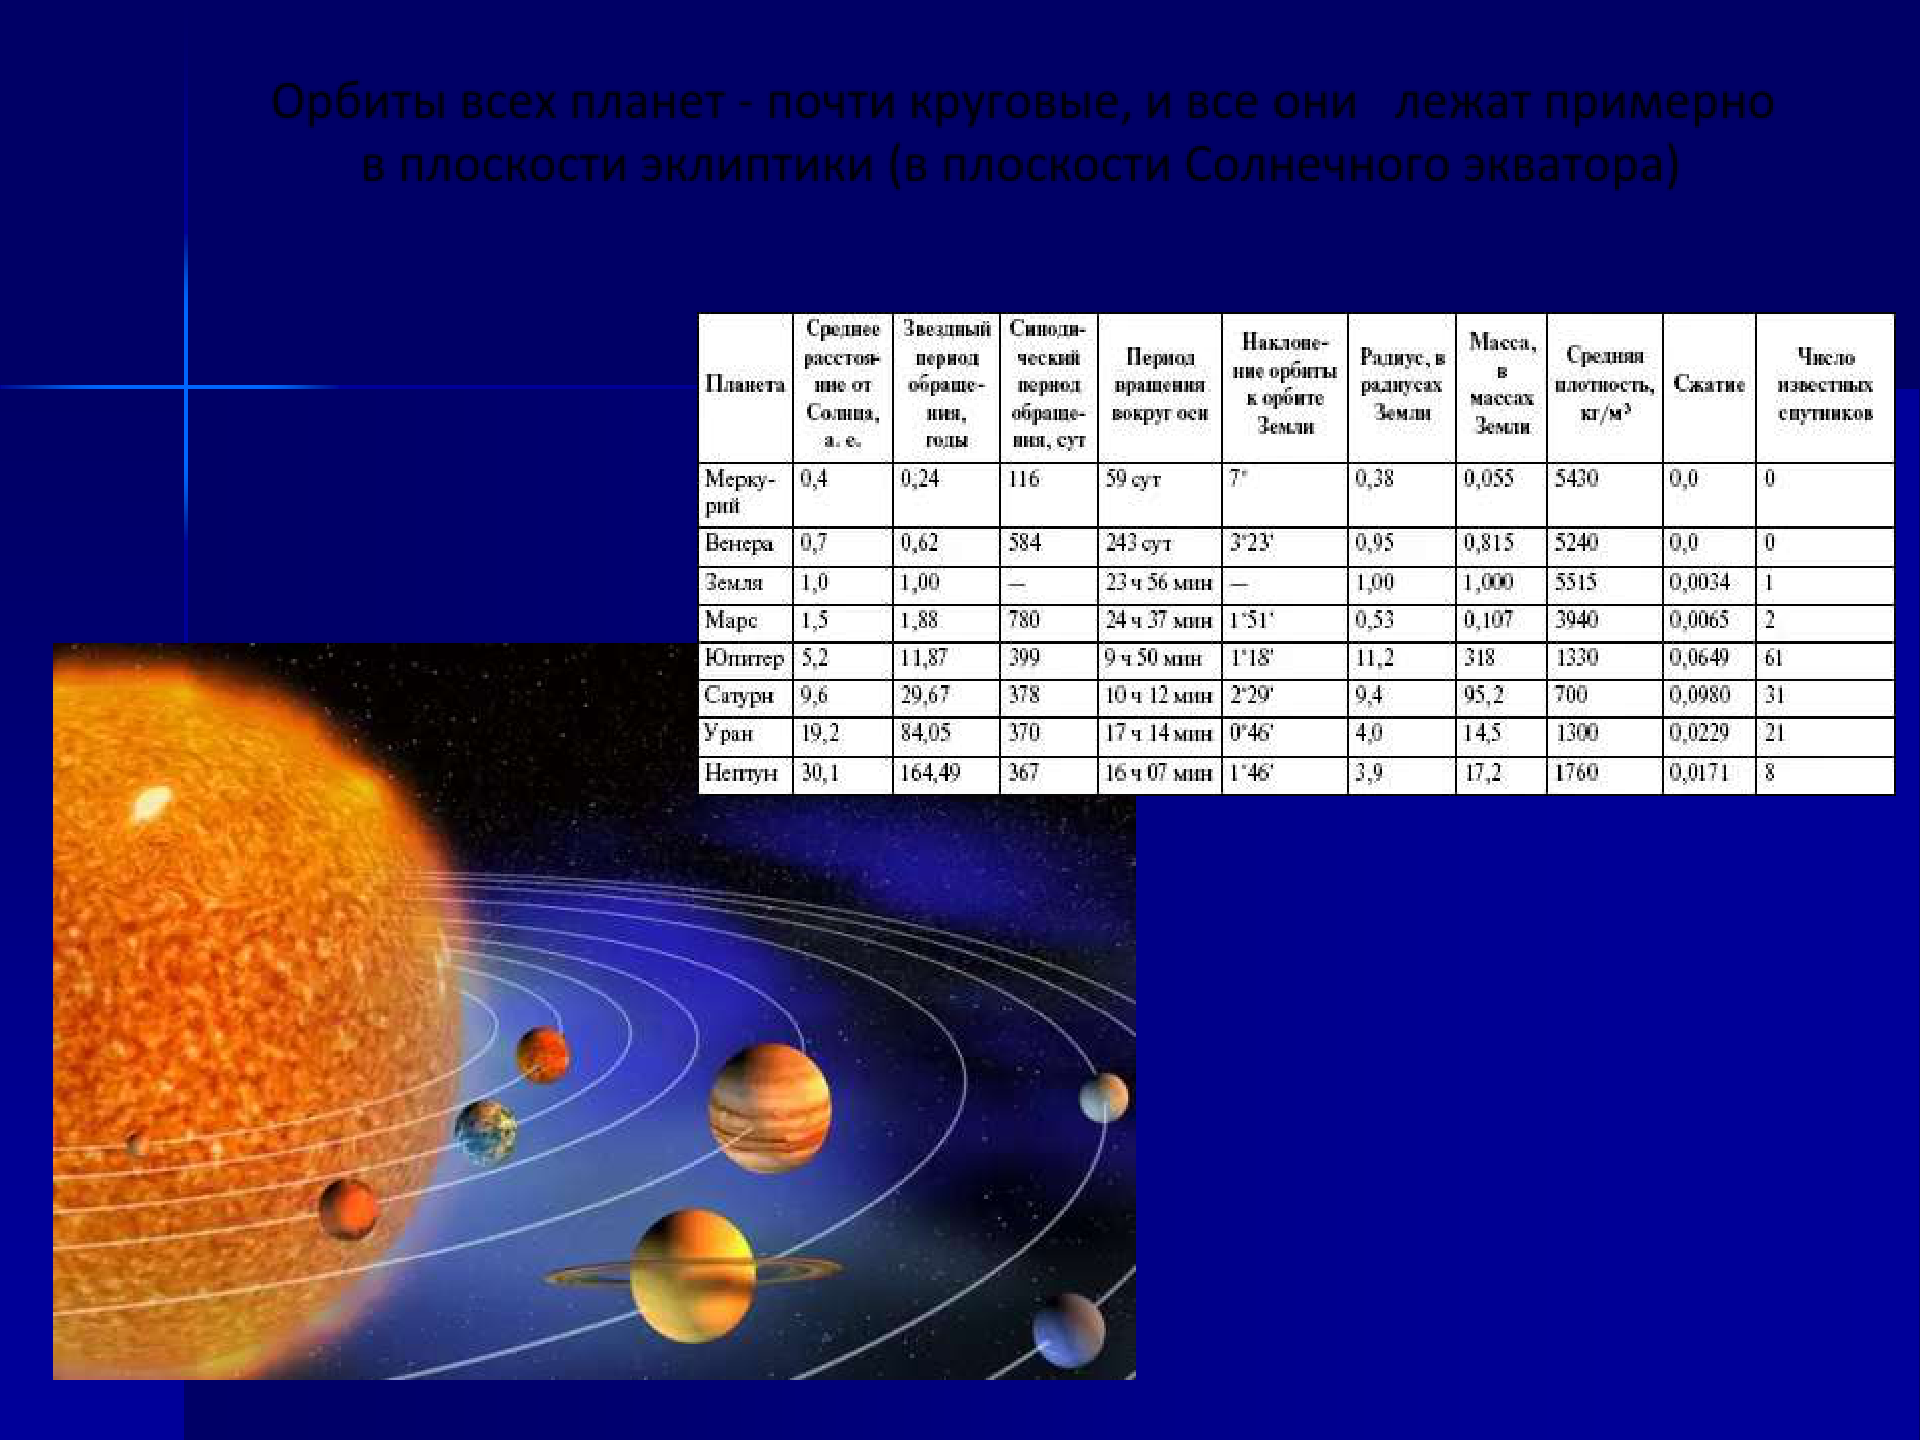 Юпитер: характеристика, атмосфера, интересные факты, будущее